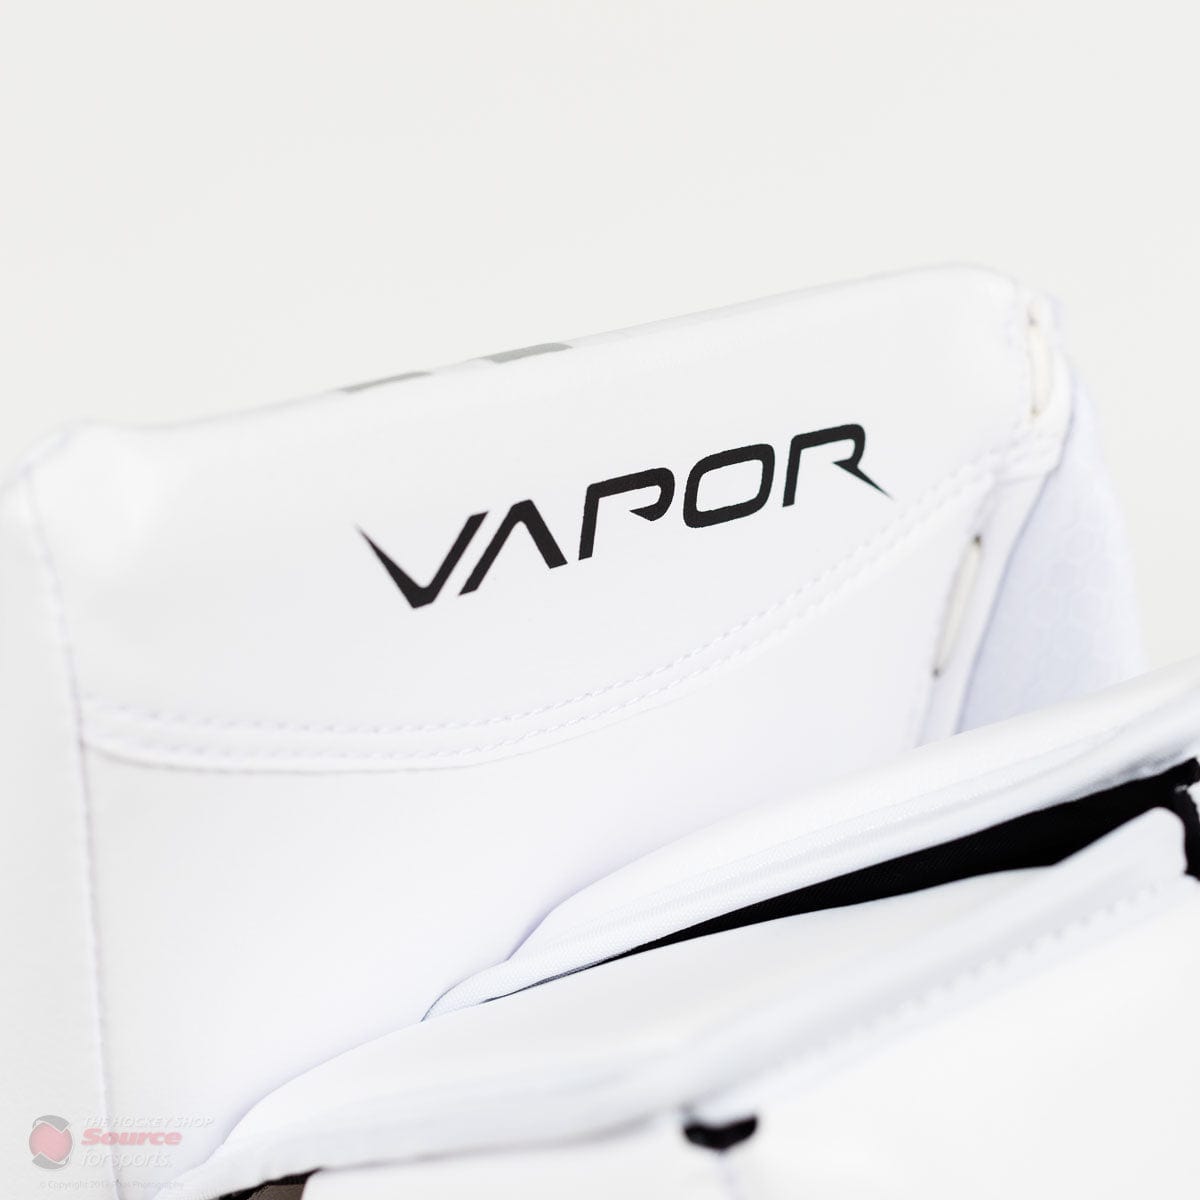 Bauer Vapor 2X Pro Senior Goalie Blocker